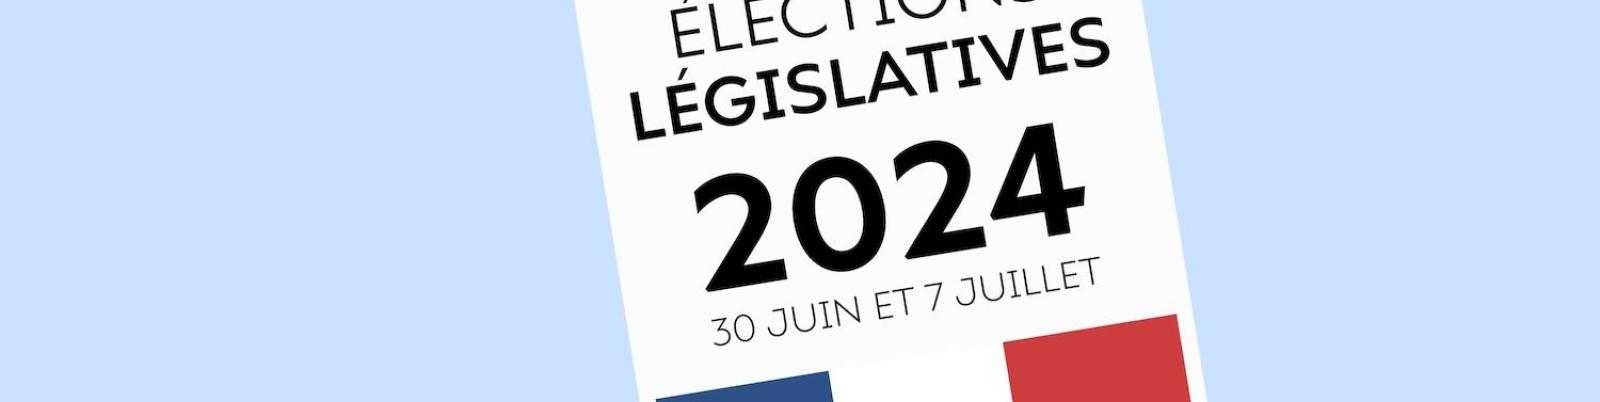 Élections législatives 2024